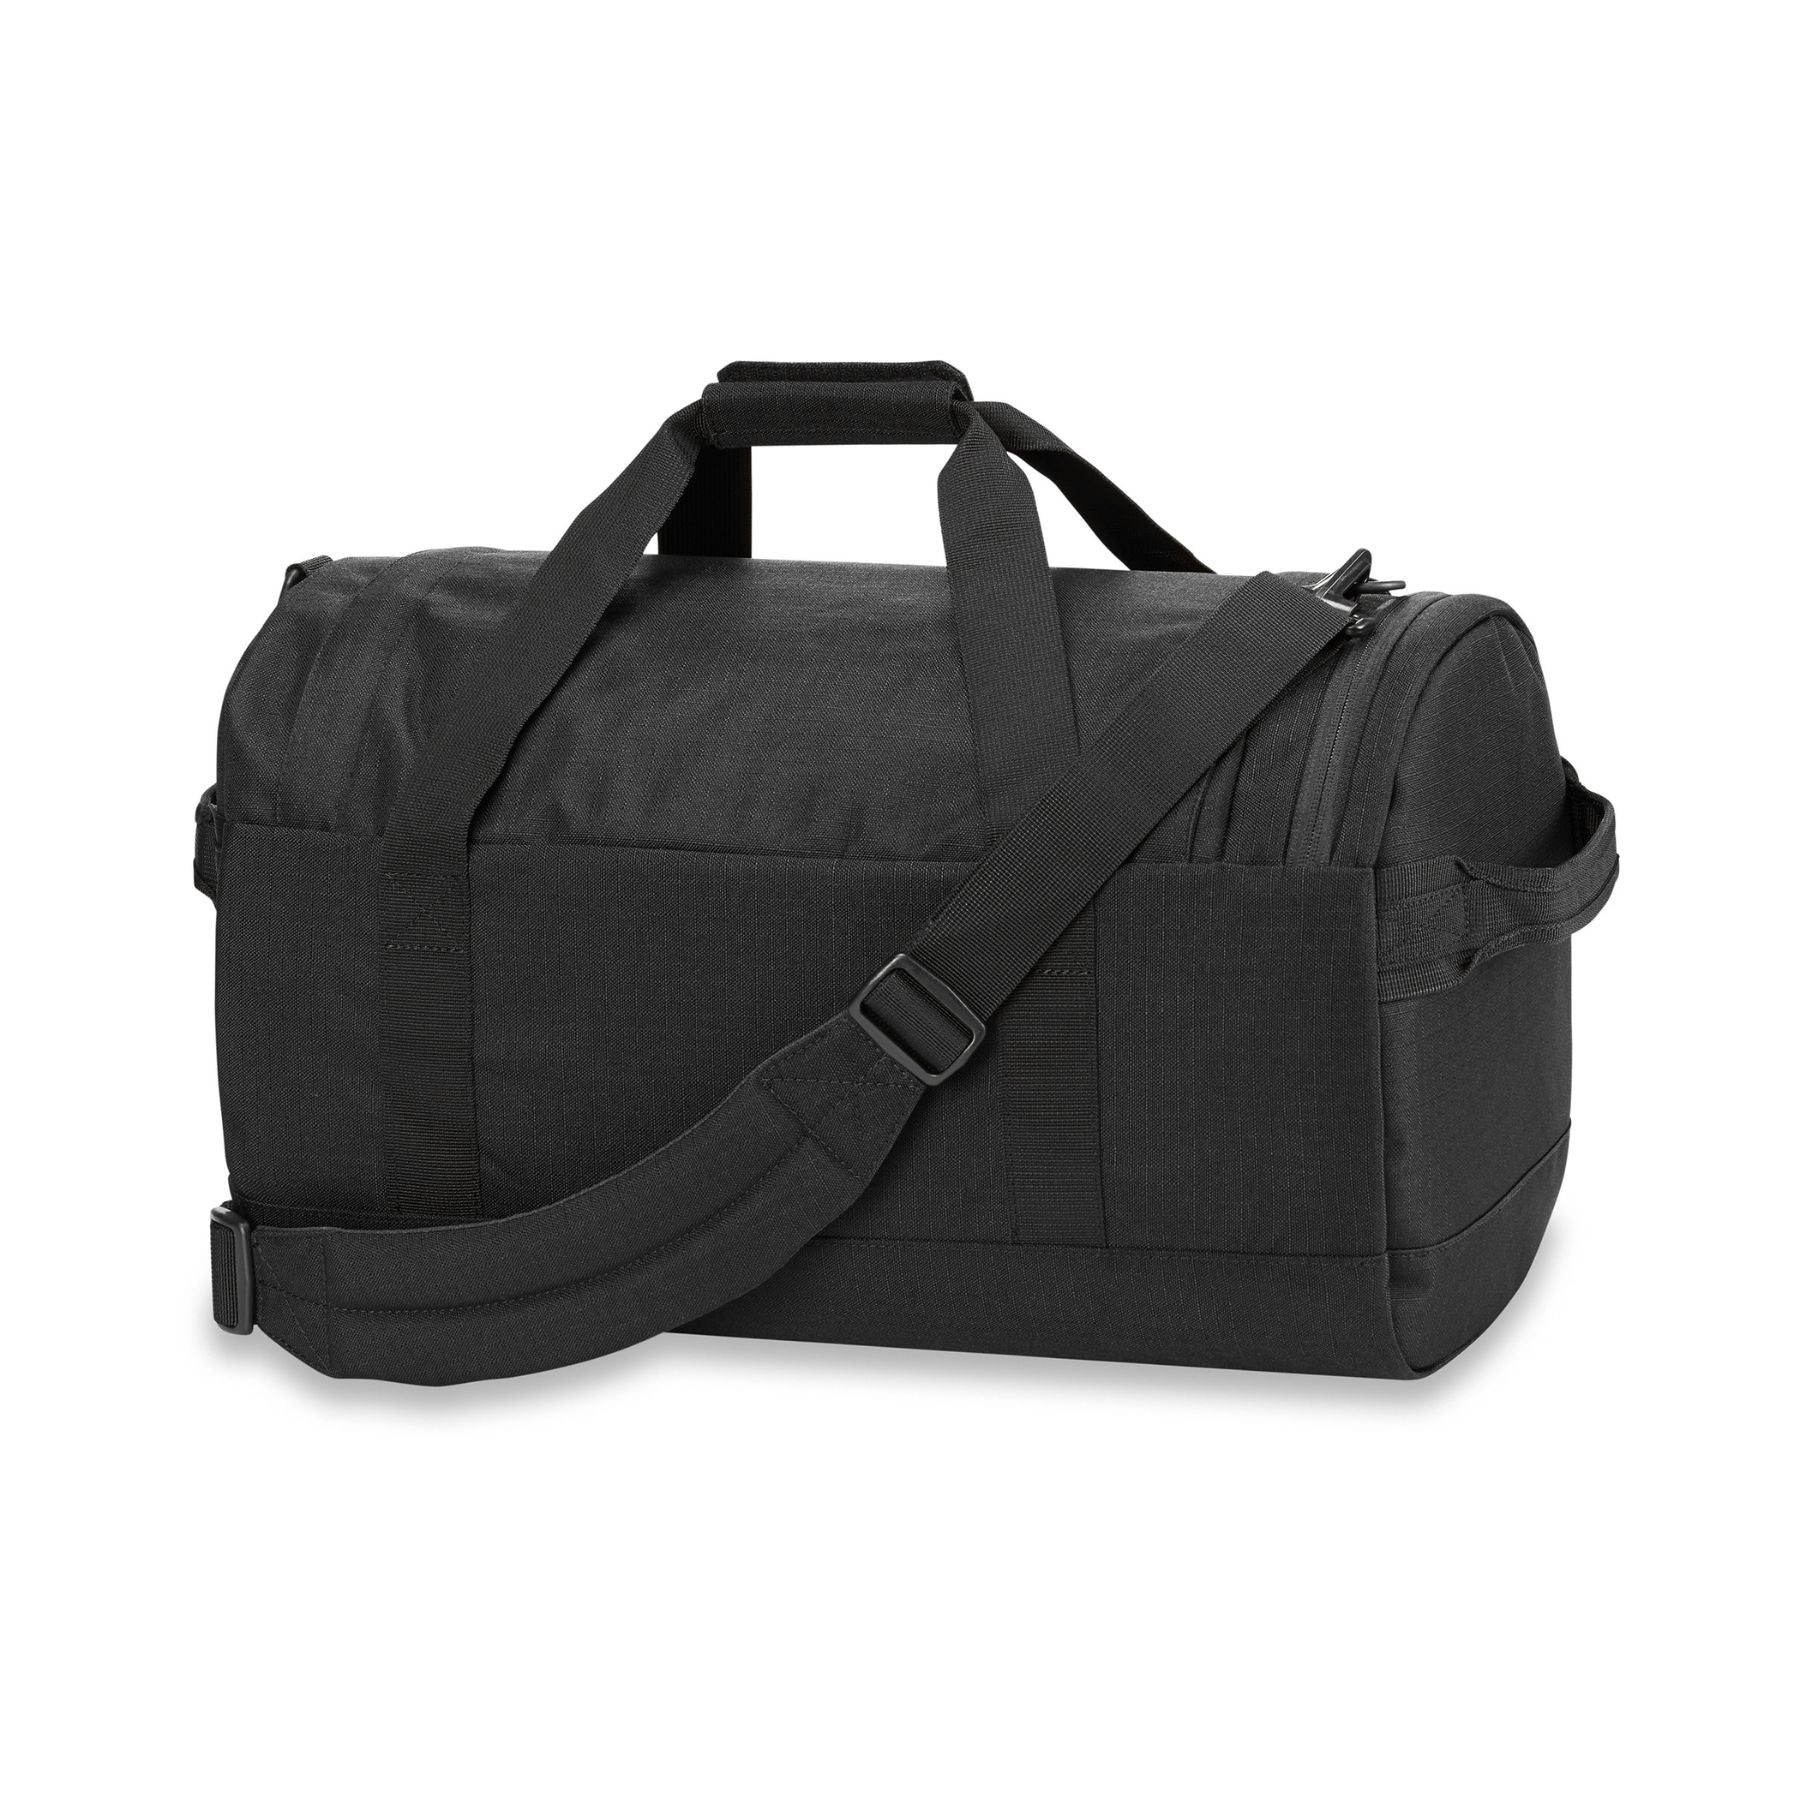 Dakine EQ Duffle 35L Bag in Black